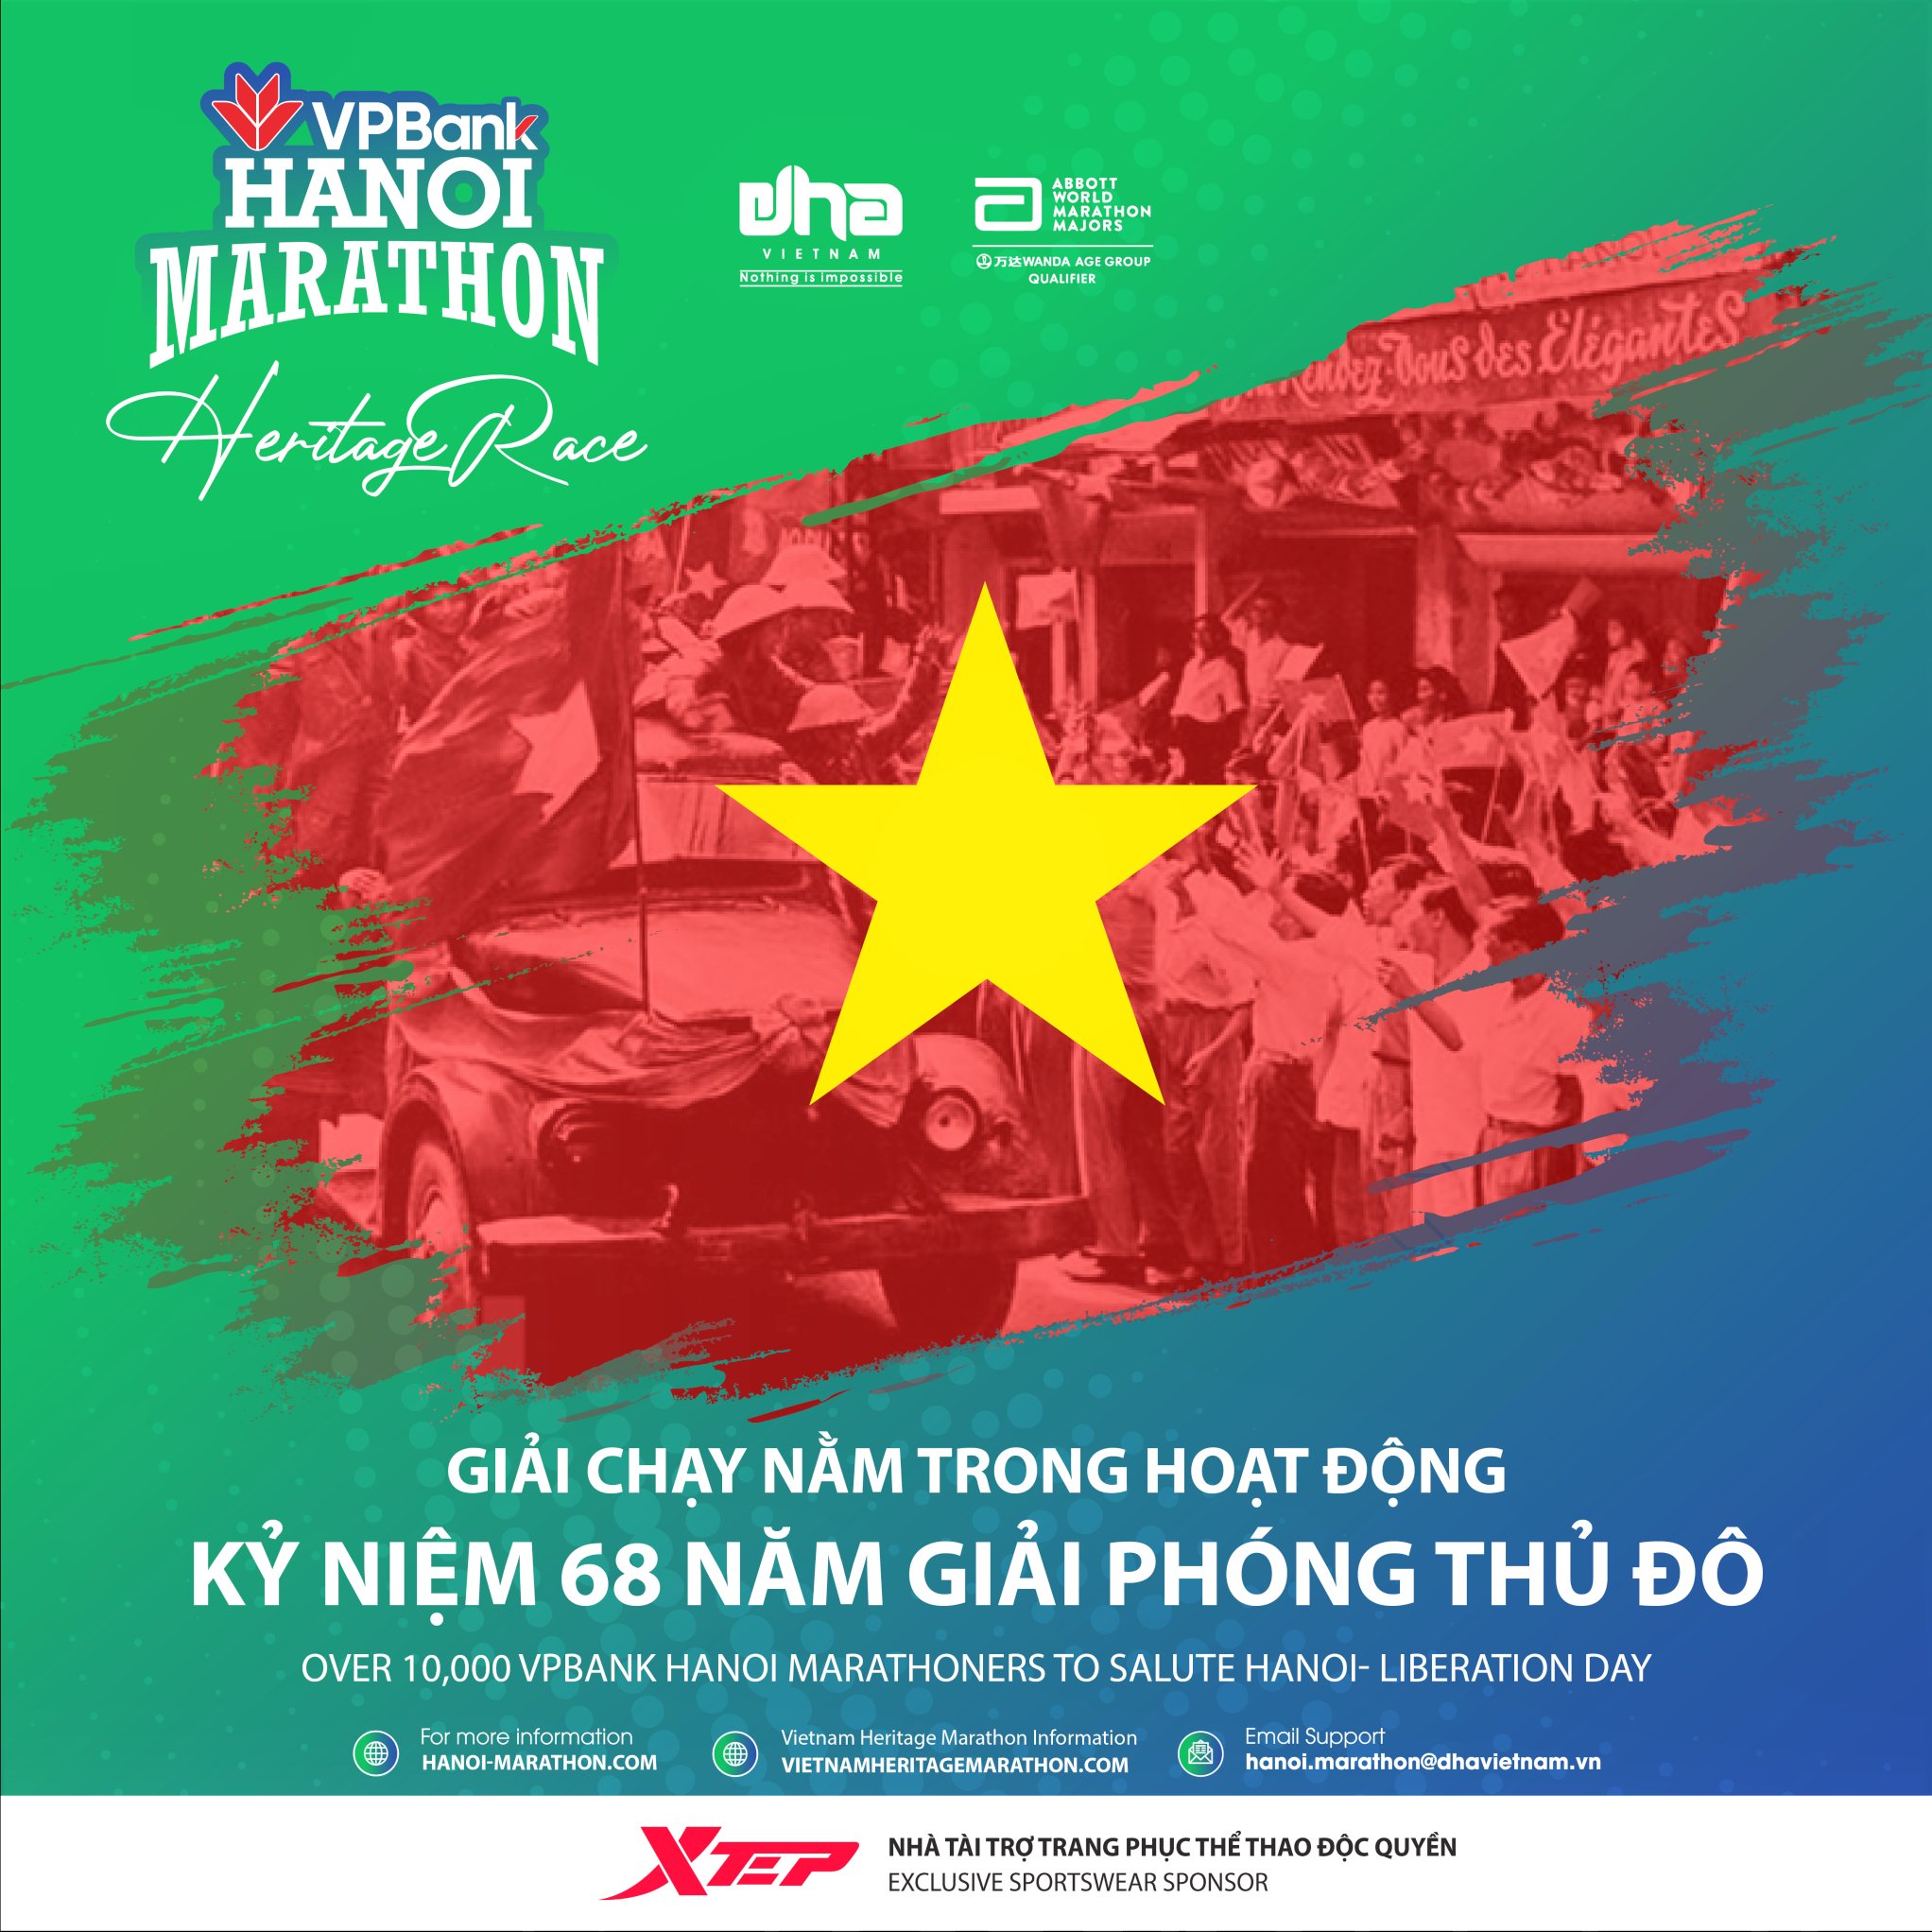 News Release: VPBank Hanoi Marathon 2022 Holds Record Number Of FM Runners